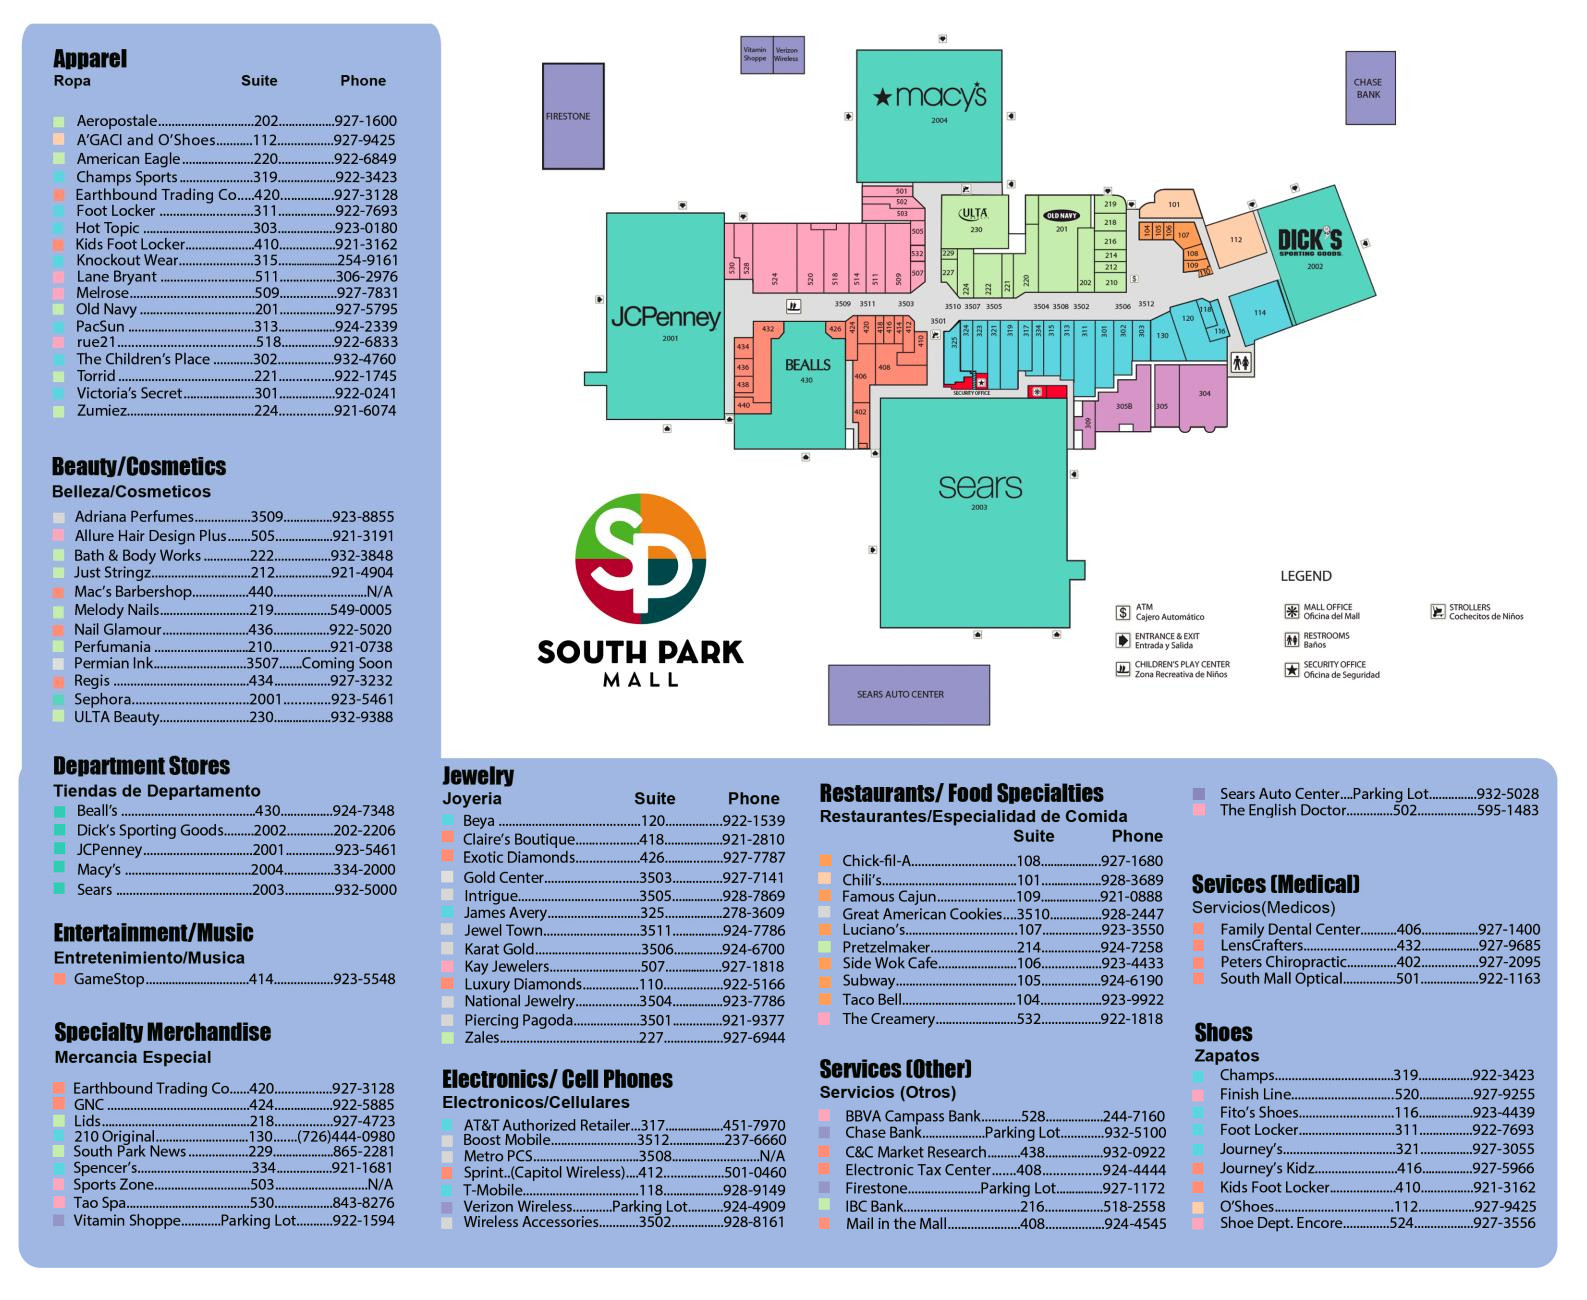 Southpark Mall directory, Southpark Mall (672,902 square fe…